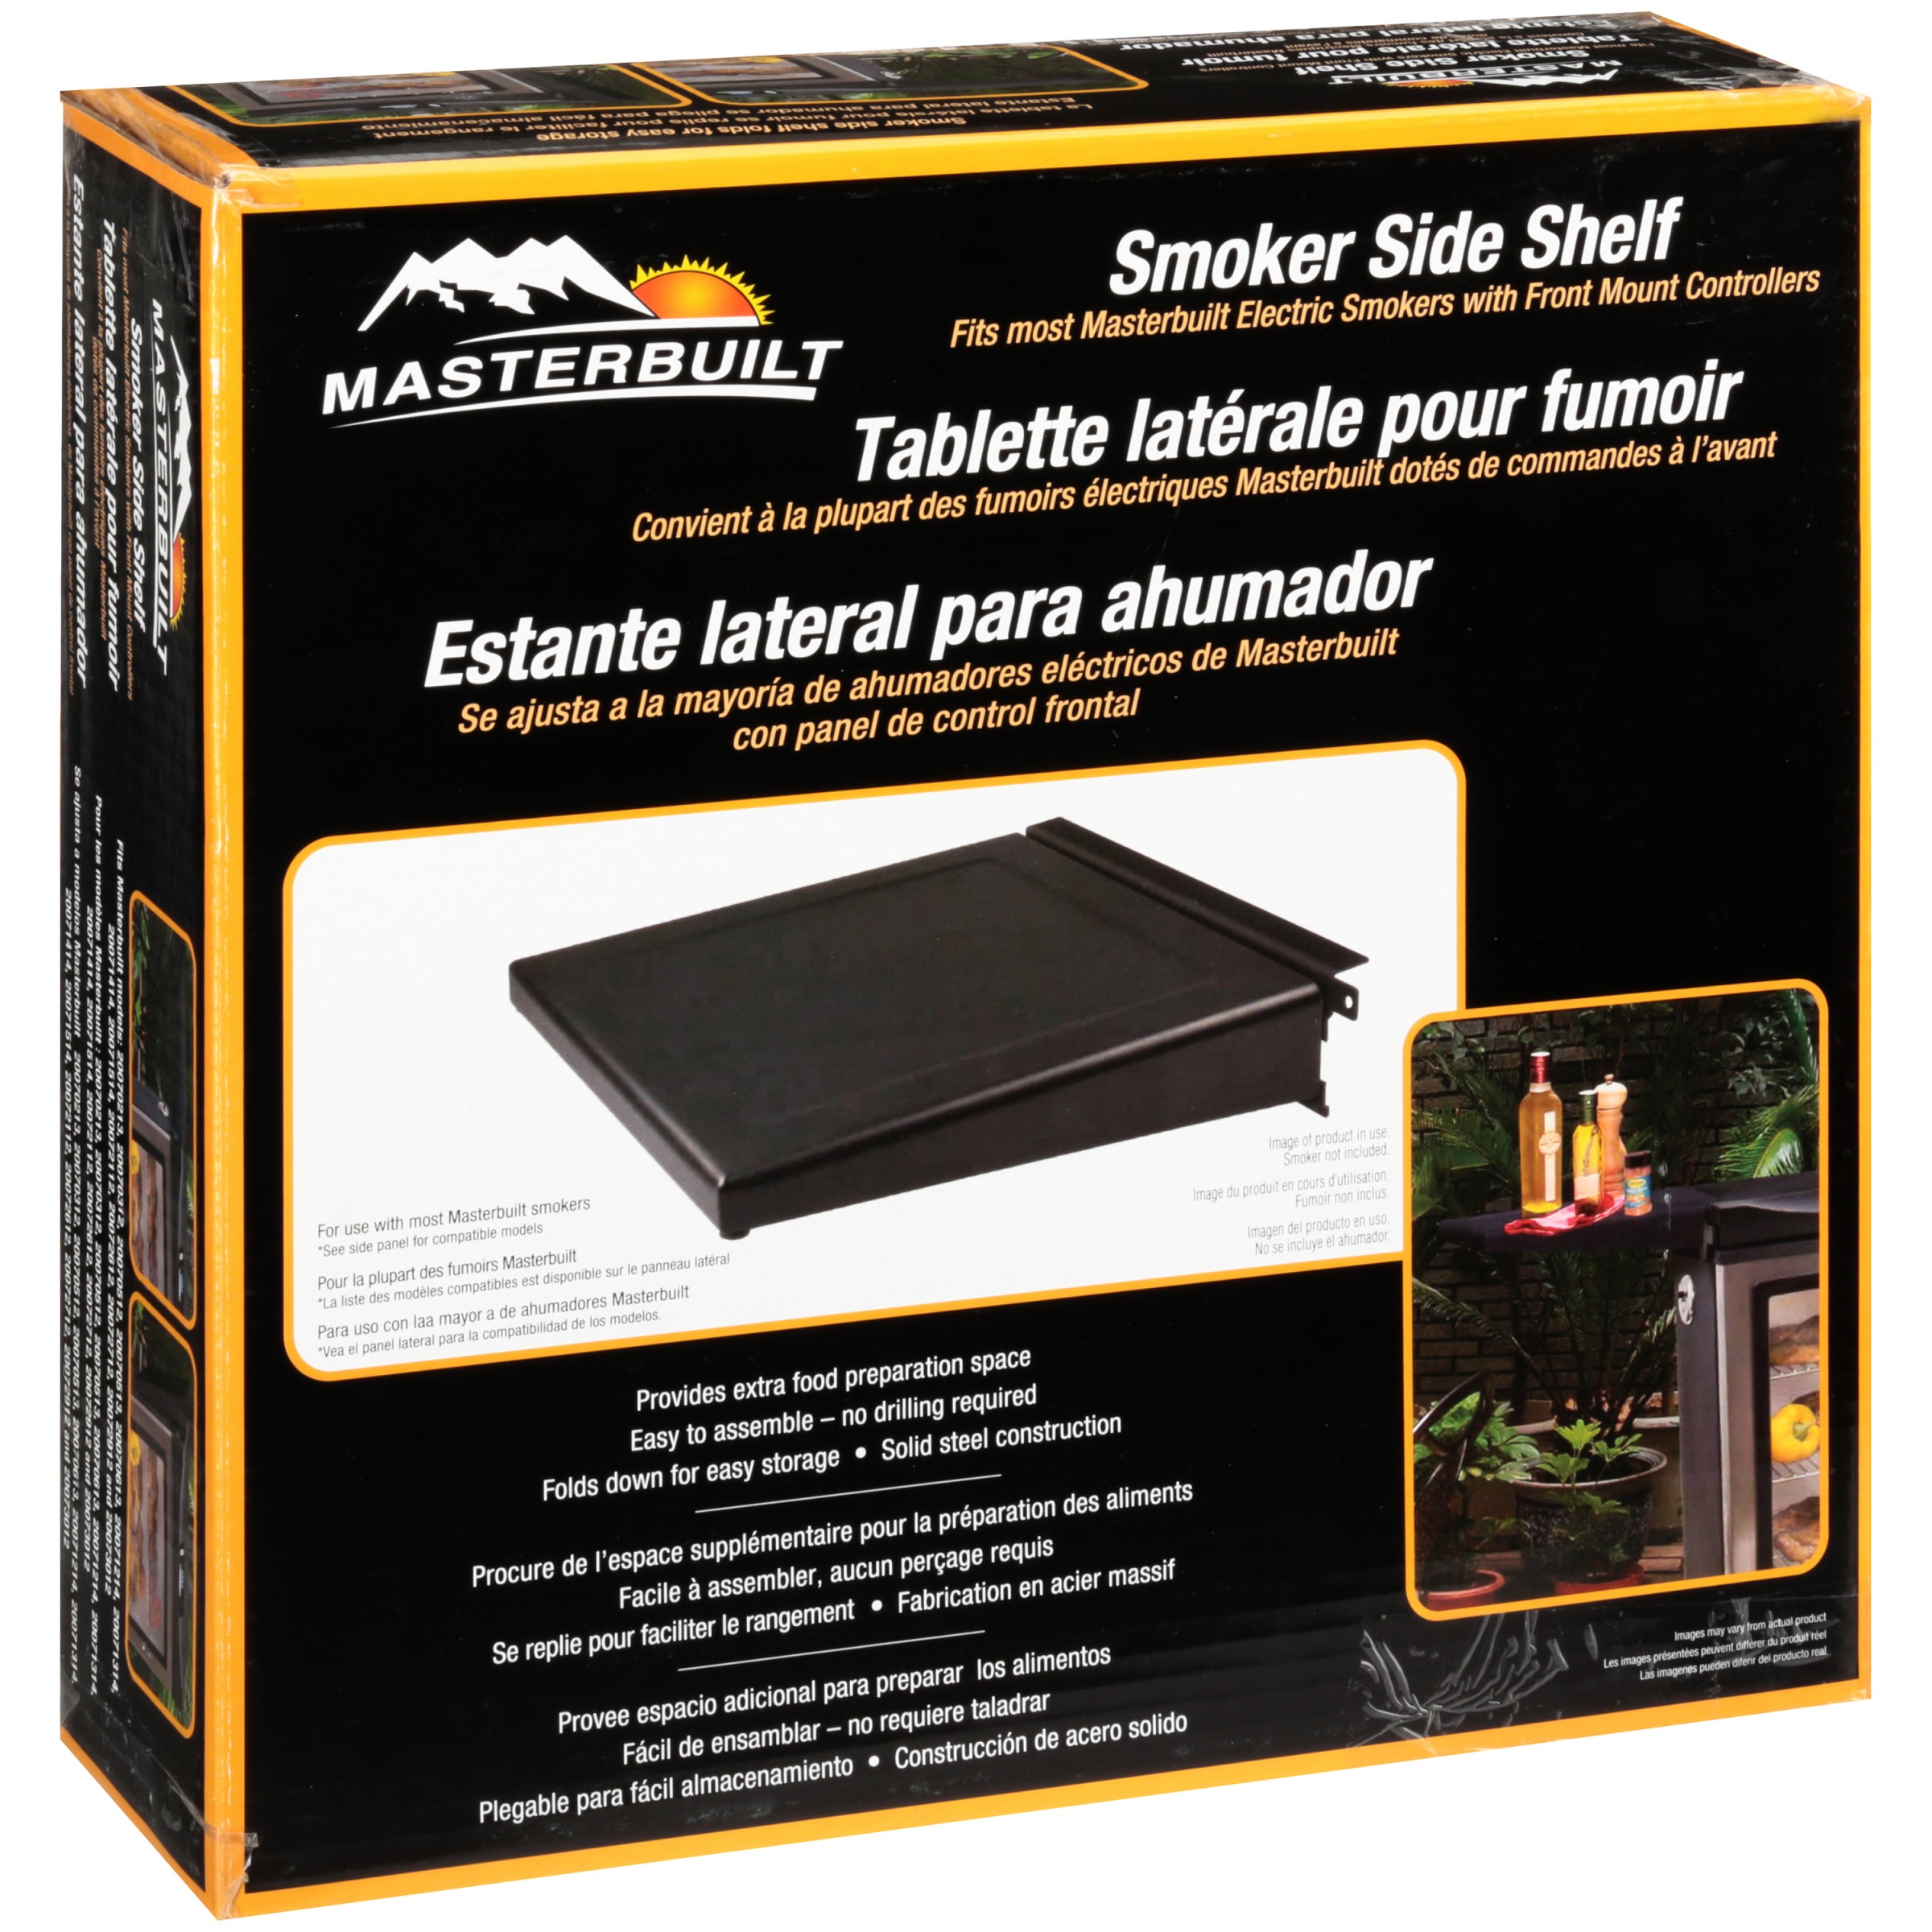 Masterbuilt Smoker Side Shelf Box - image 2 of 4